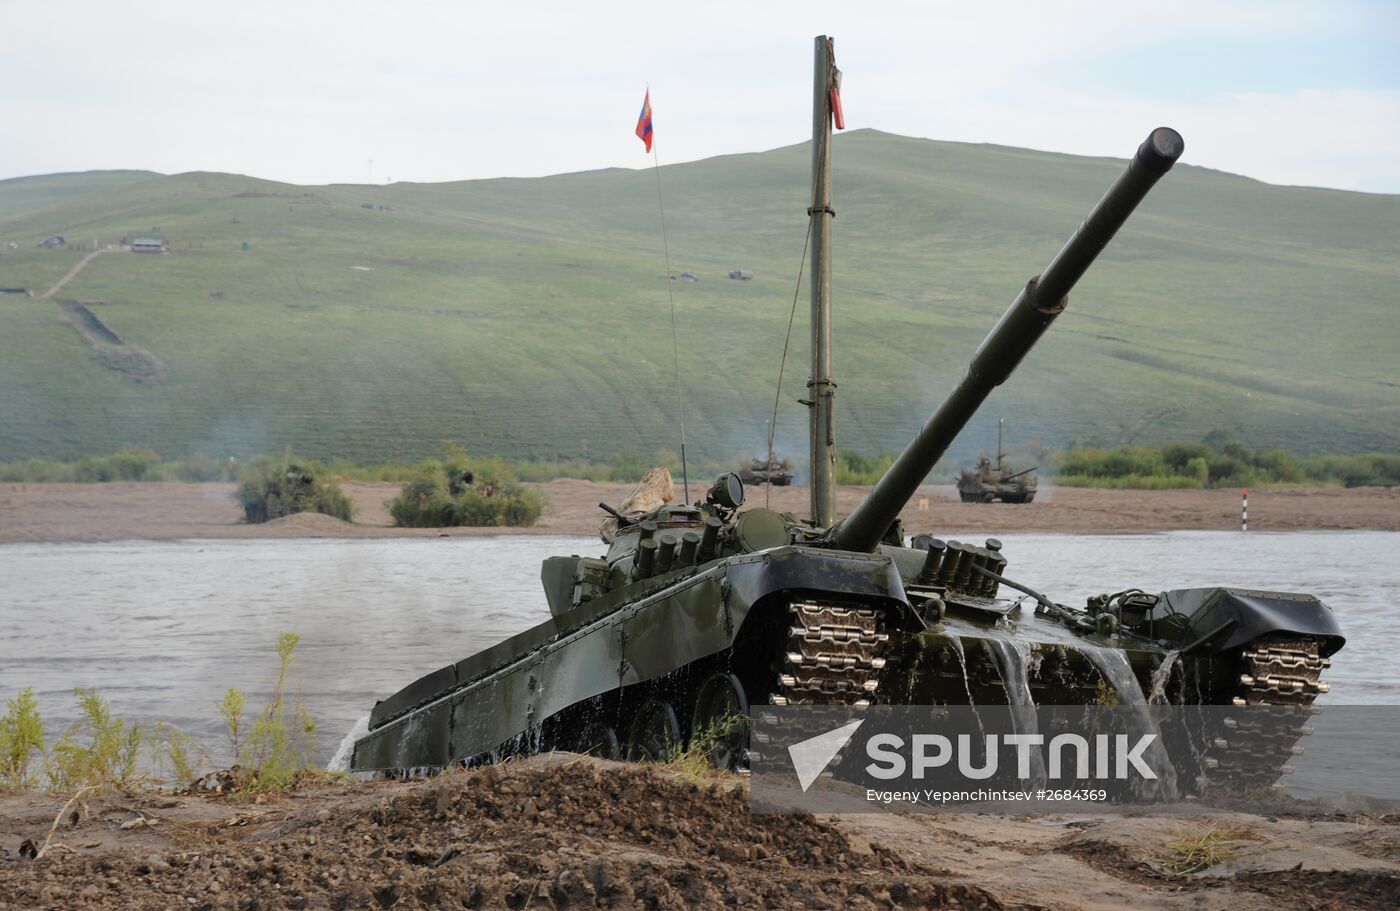 Russian-Mongolian military exercises "Selenga-2015" in Trans-Baikal Territory